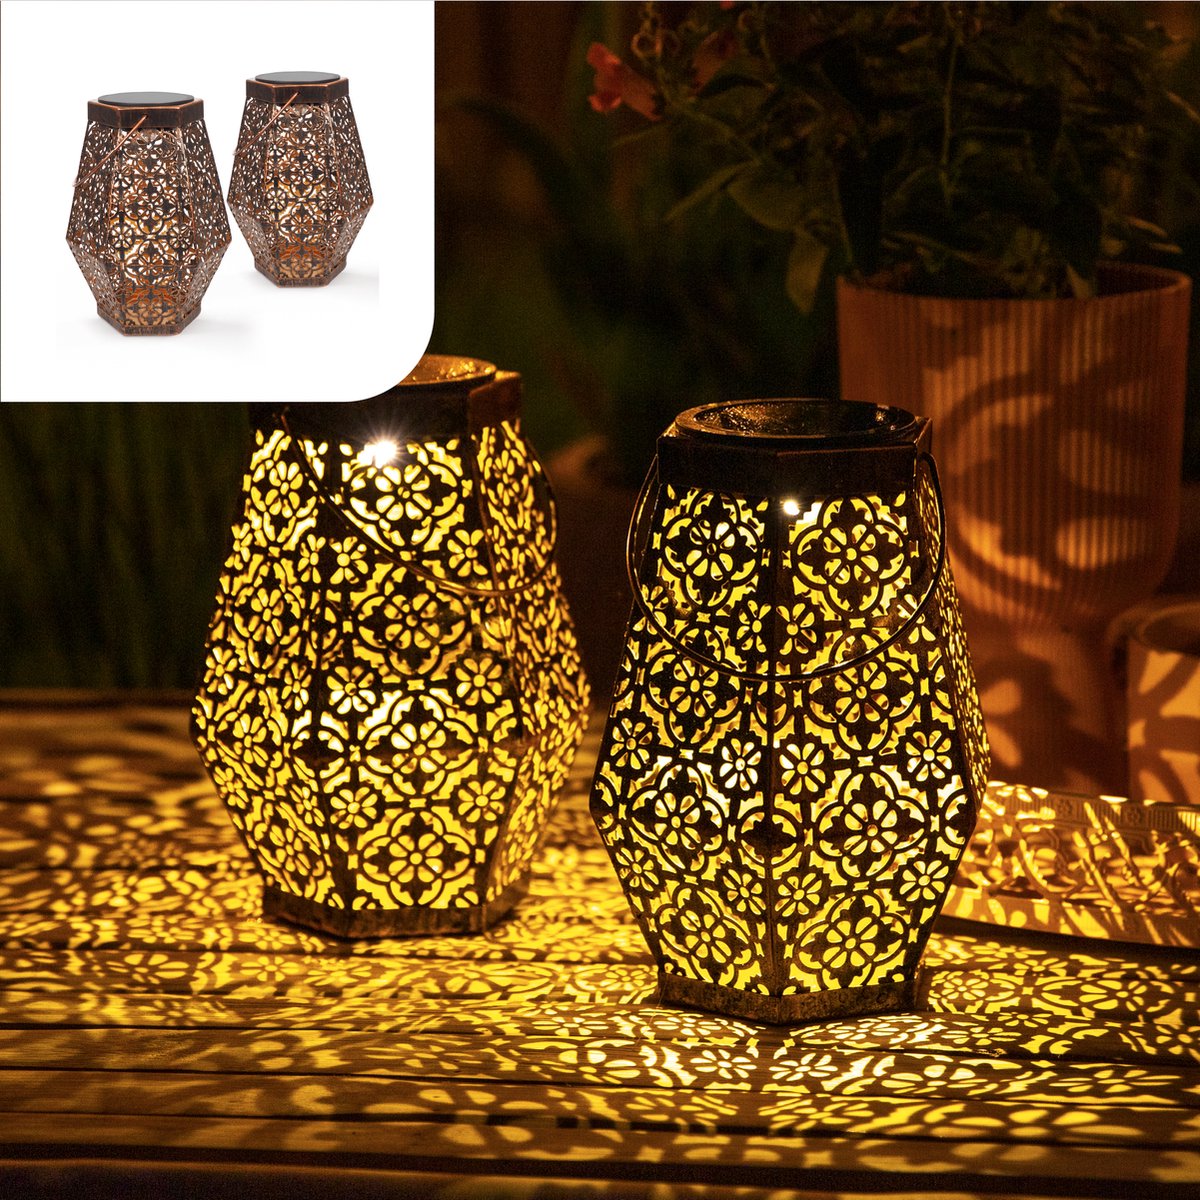 Gadgy Eclairage Jardin Solar Lampe de Table Maya XL - Lampe